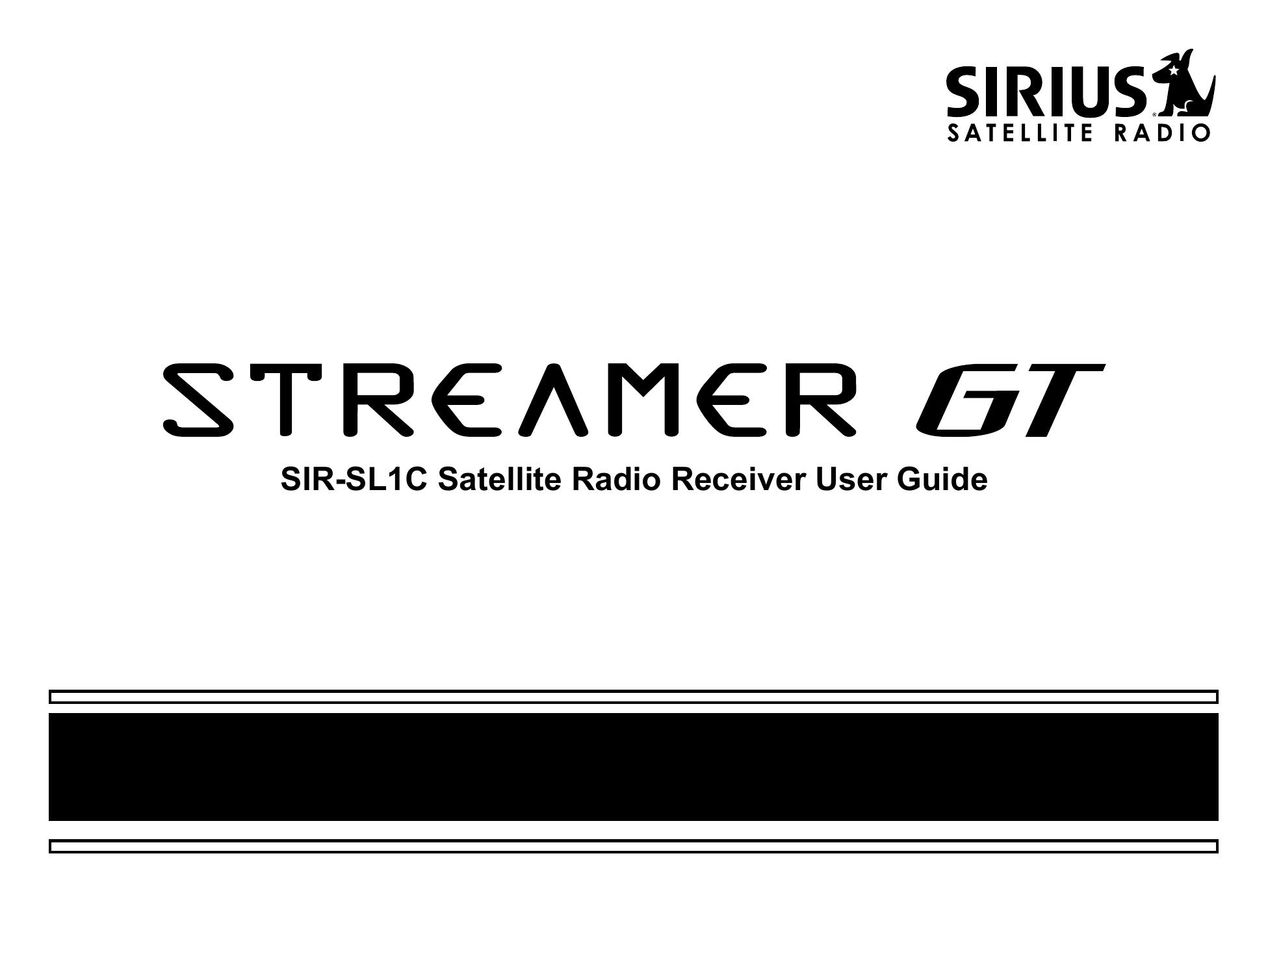 Sirius Satellite Radio SIR-SL1C Satellite Radio User Manual